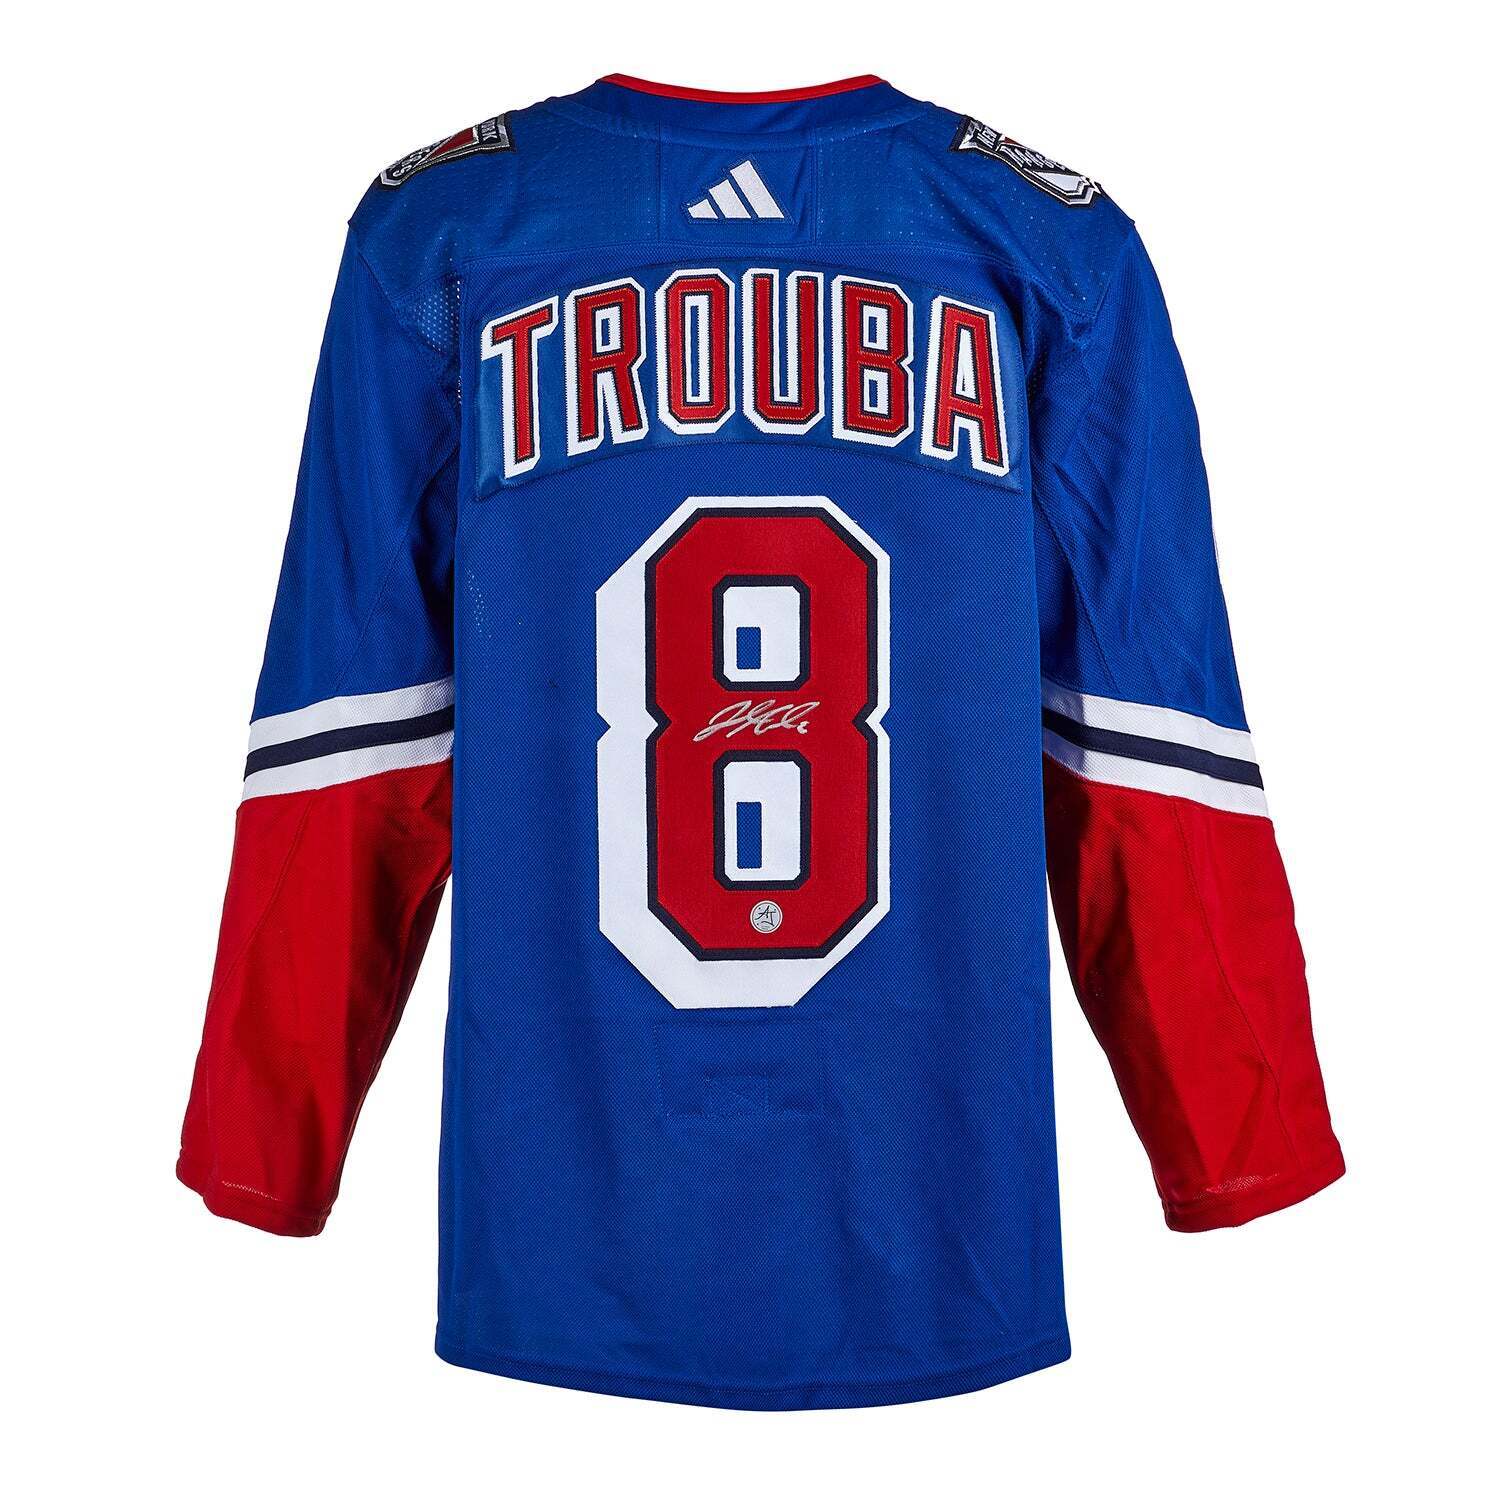 Jacob Trouba New York Rangers Autographed Signed Adidas Jersey